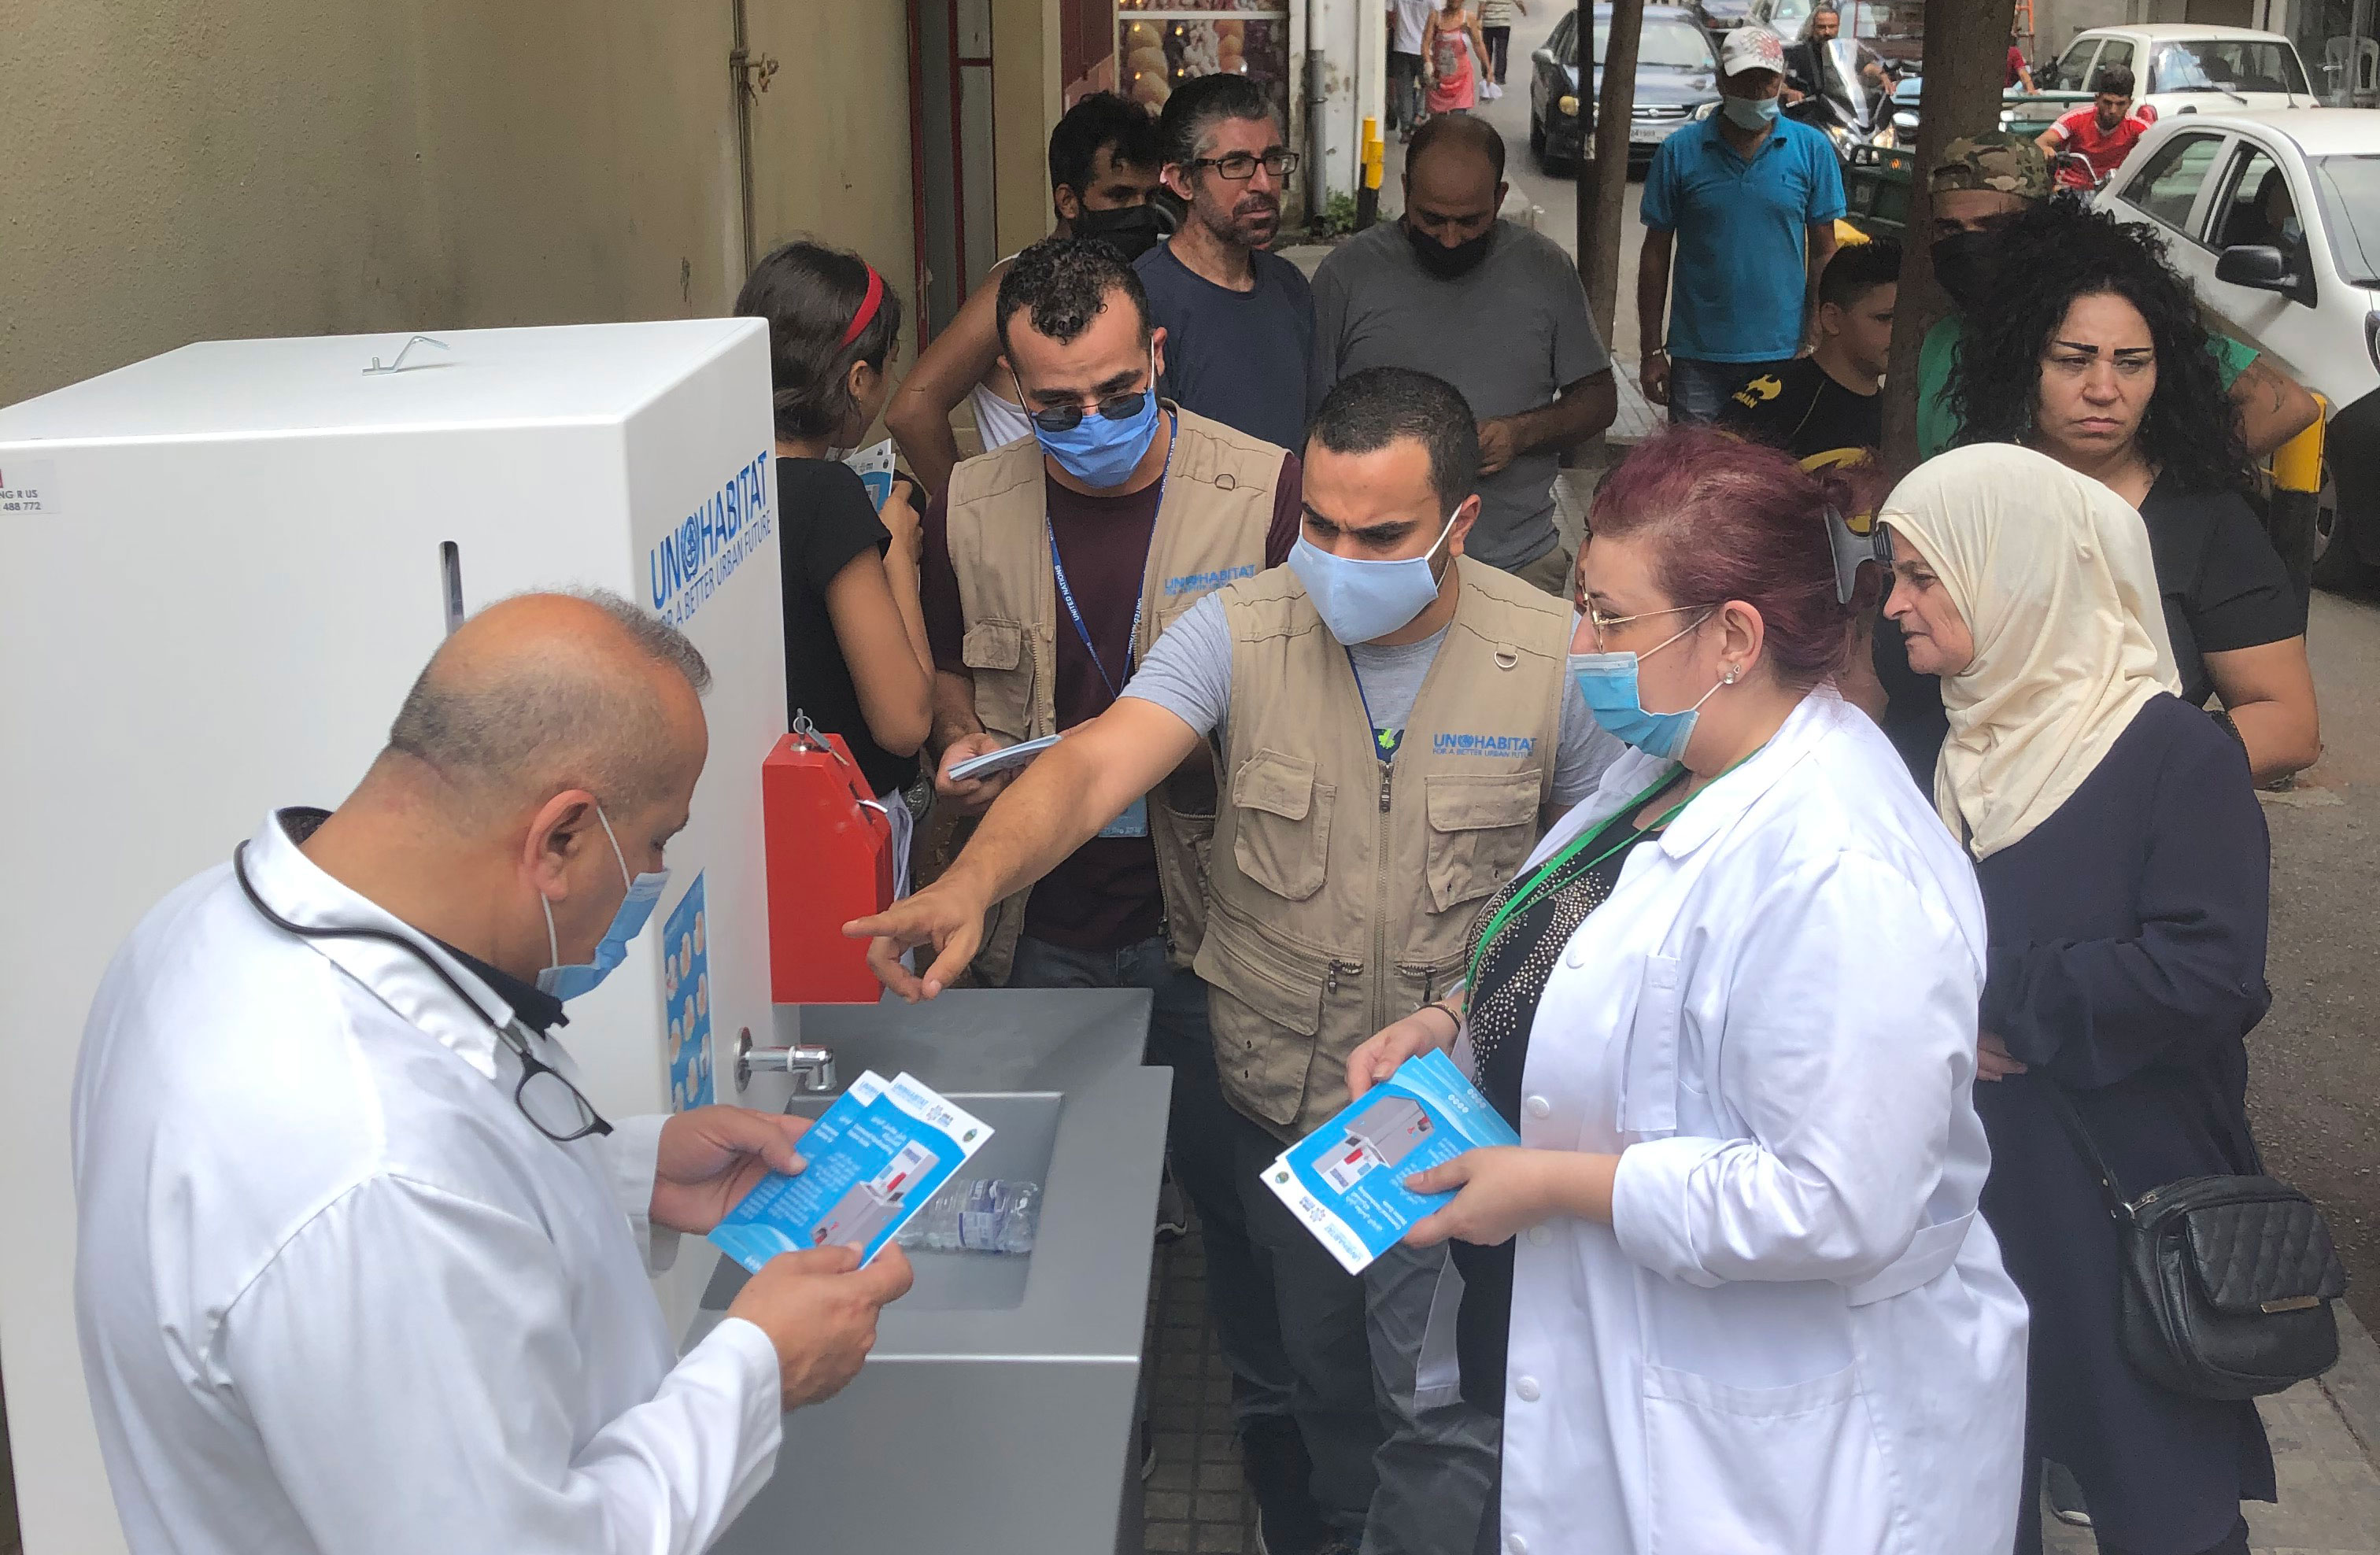 UN-Habitat team raising awareness on use of the communal handwashing station in Bourj Hammoud, Mount Lebanon